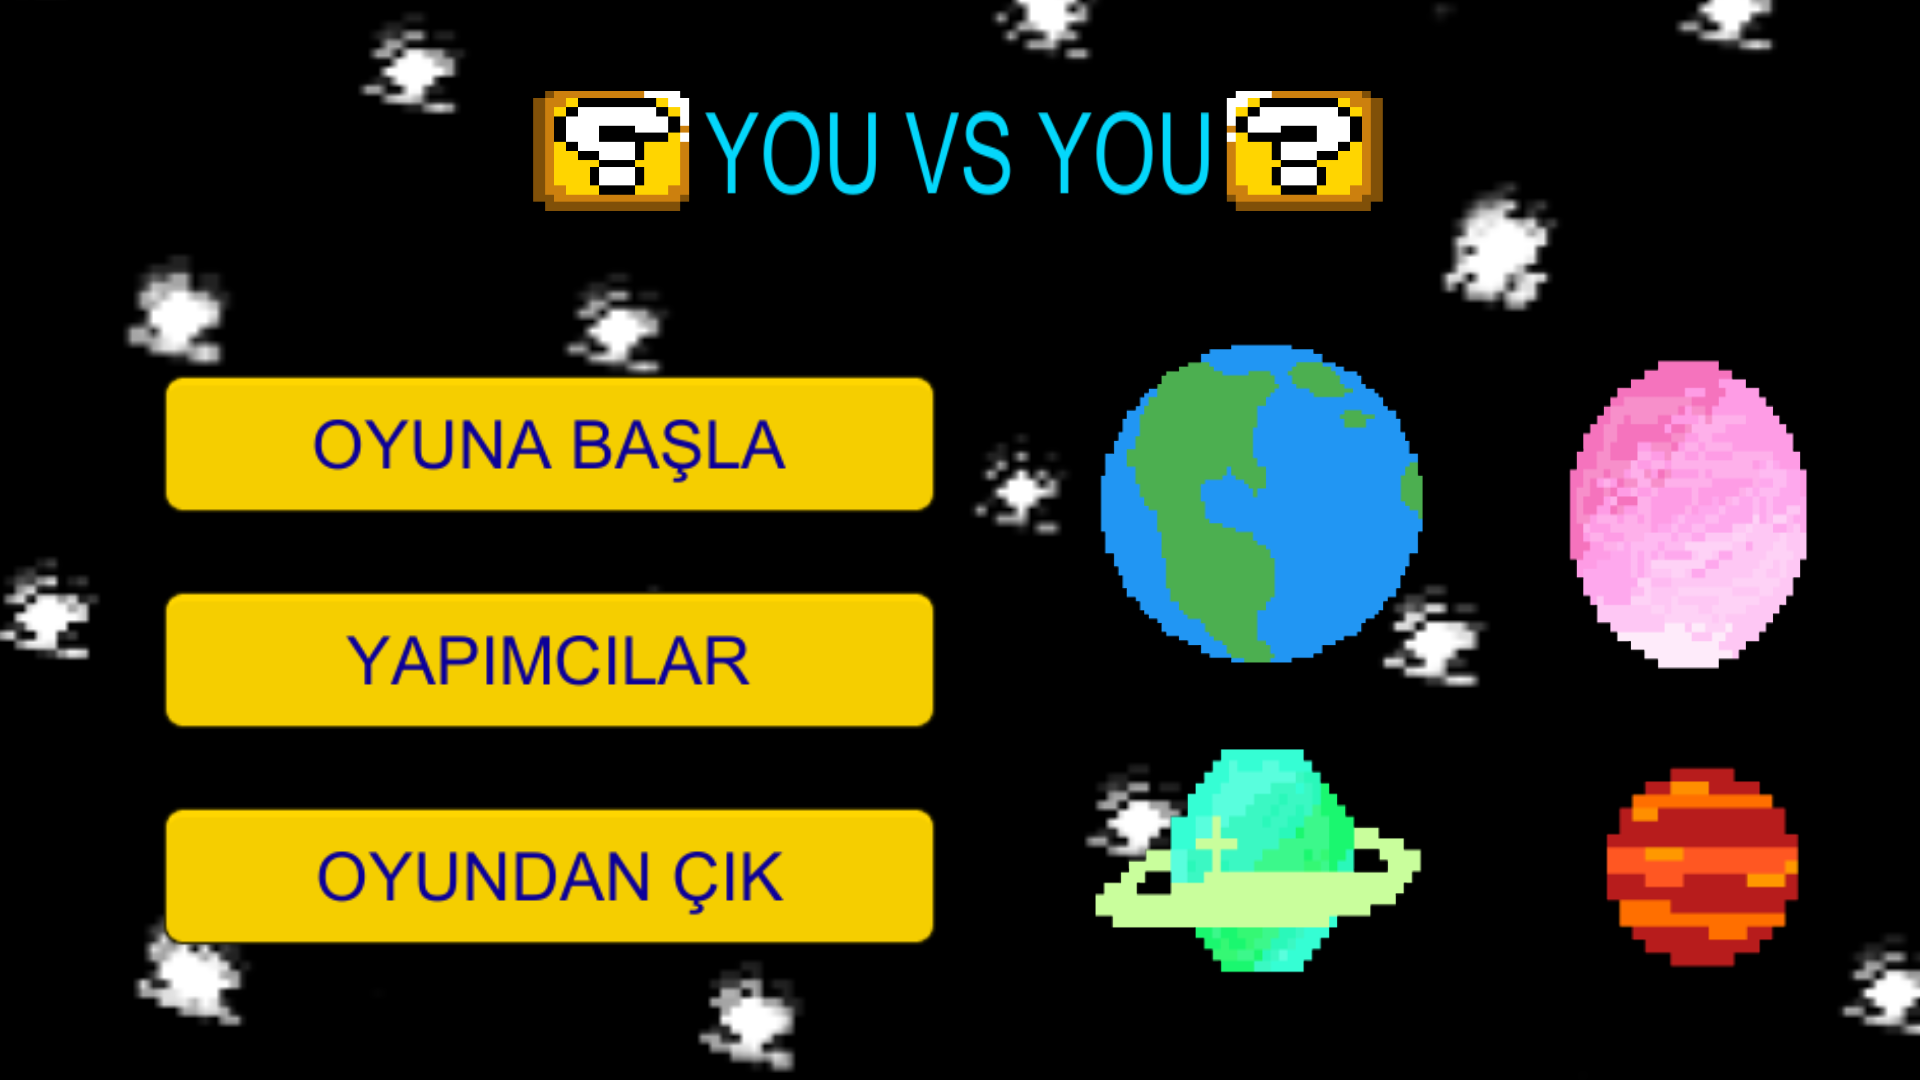 YOU VS YOU